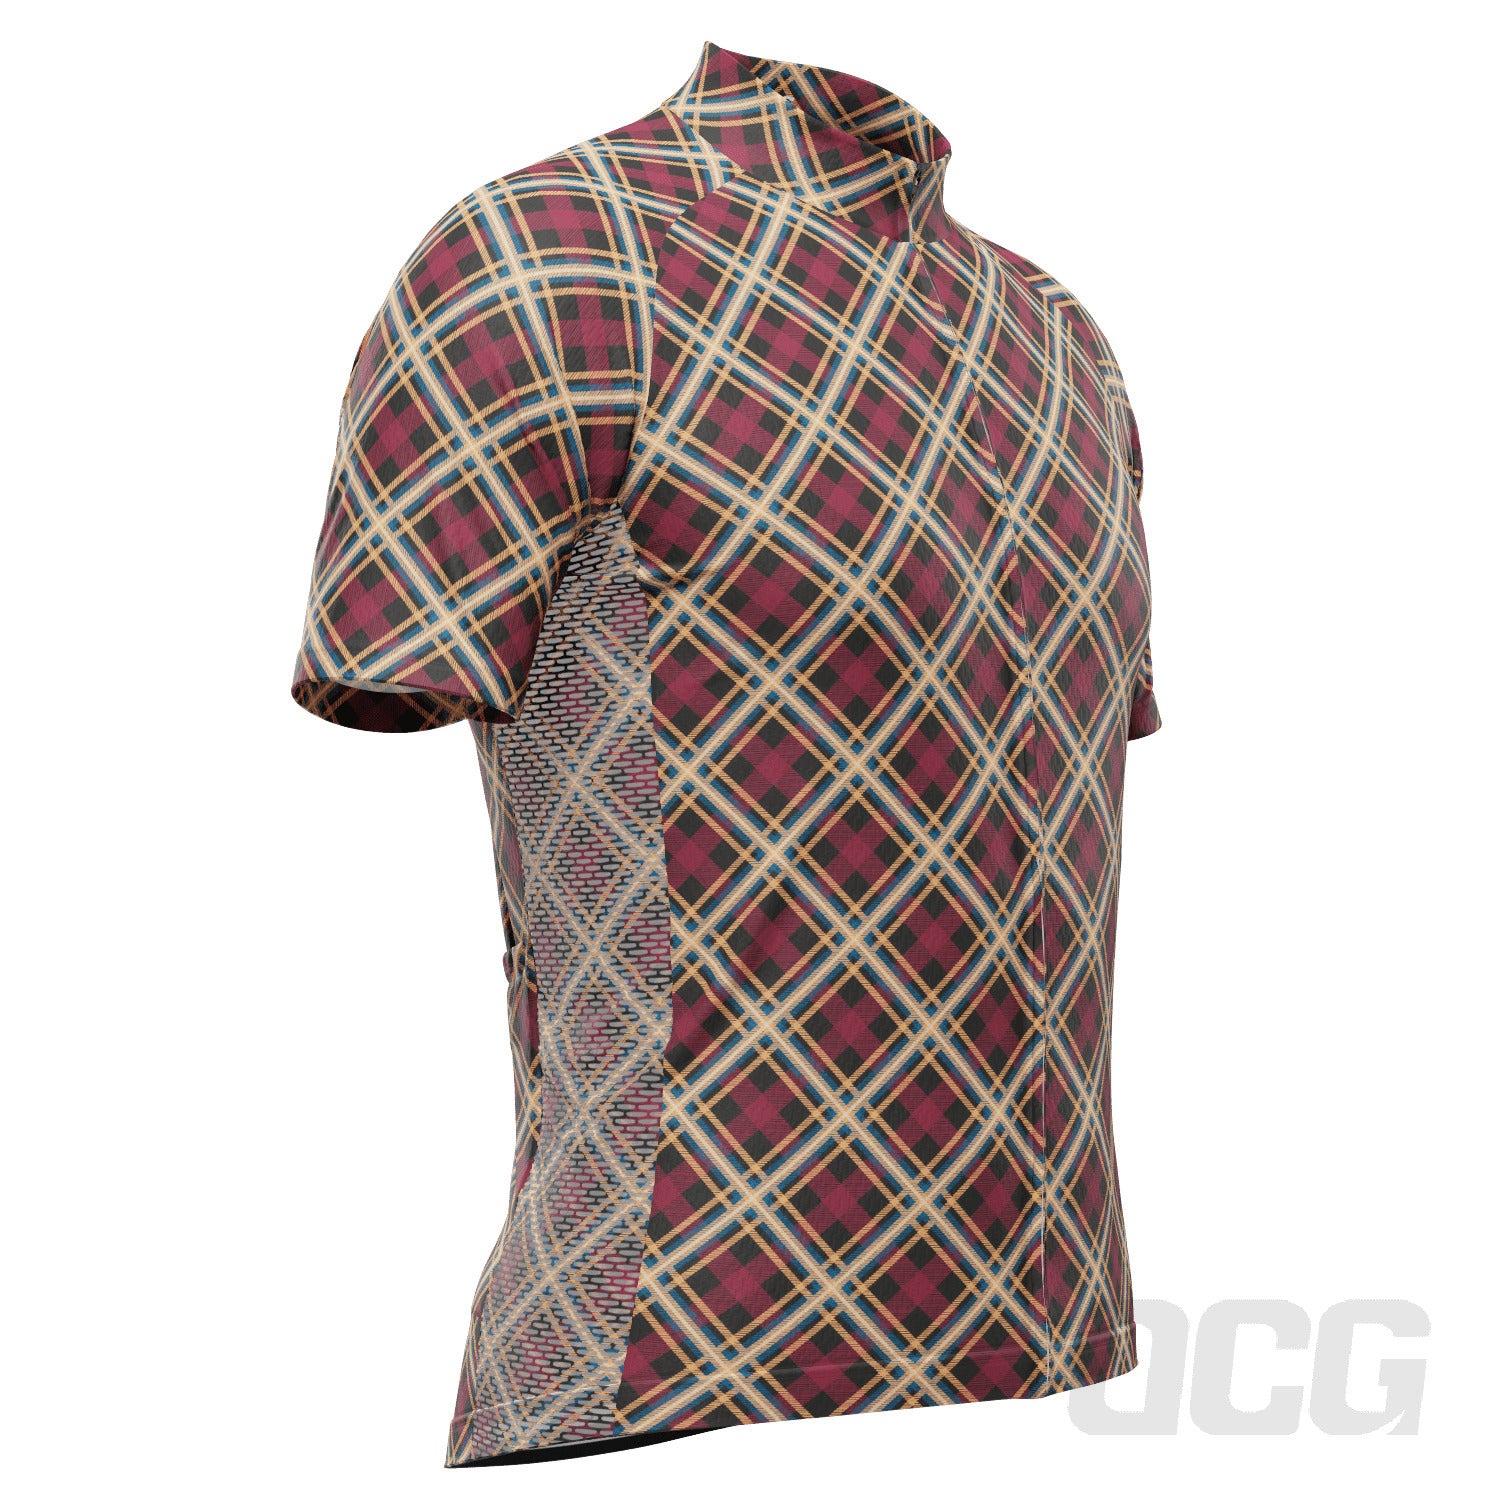 Men's Red Plaid Checkered Shirt Cycling Jersey